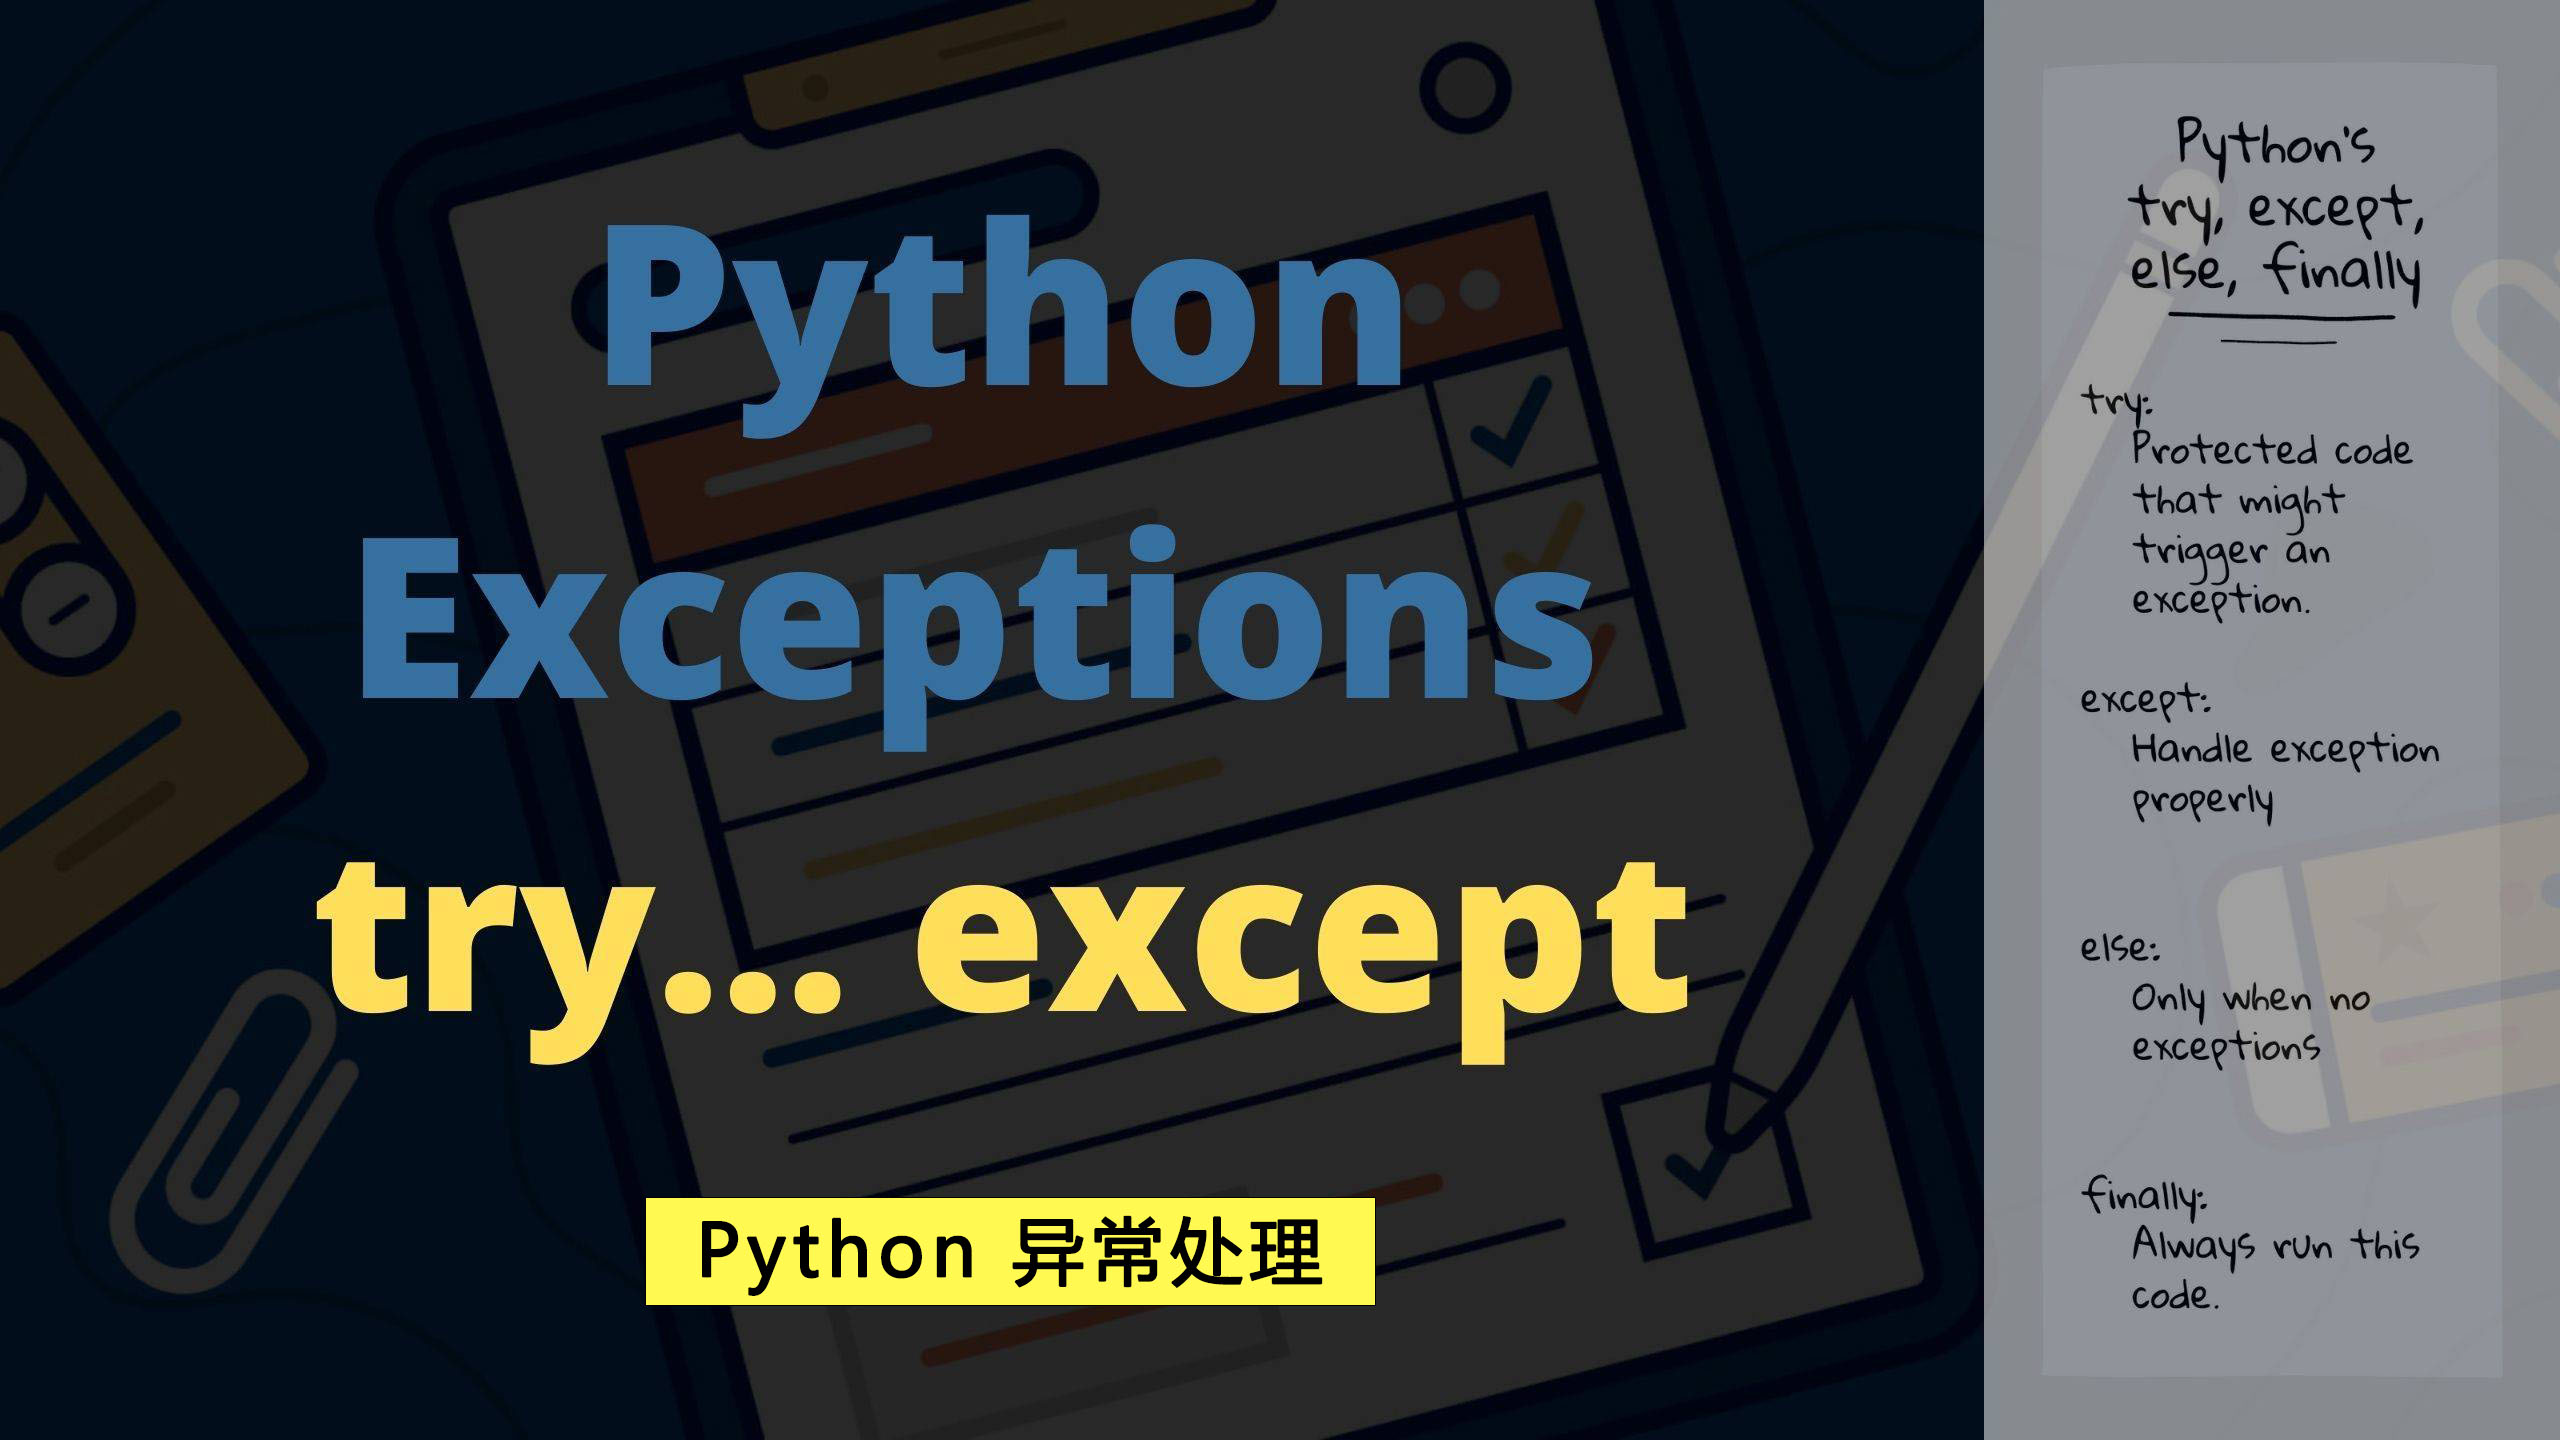 使用Python try/except 捕获和处理异常提高你的编程能力